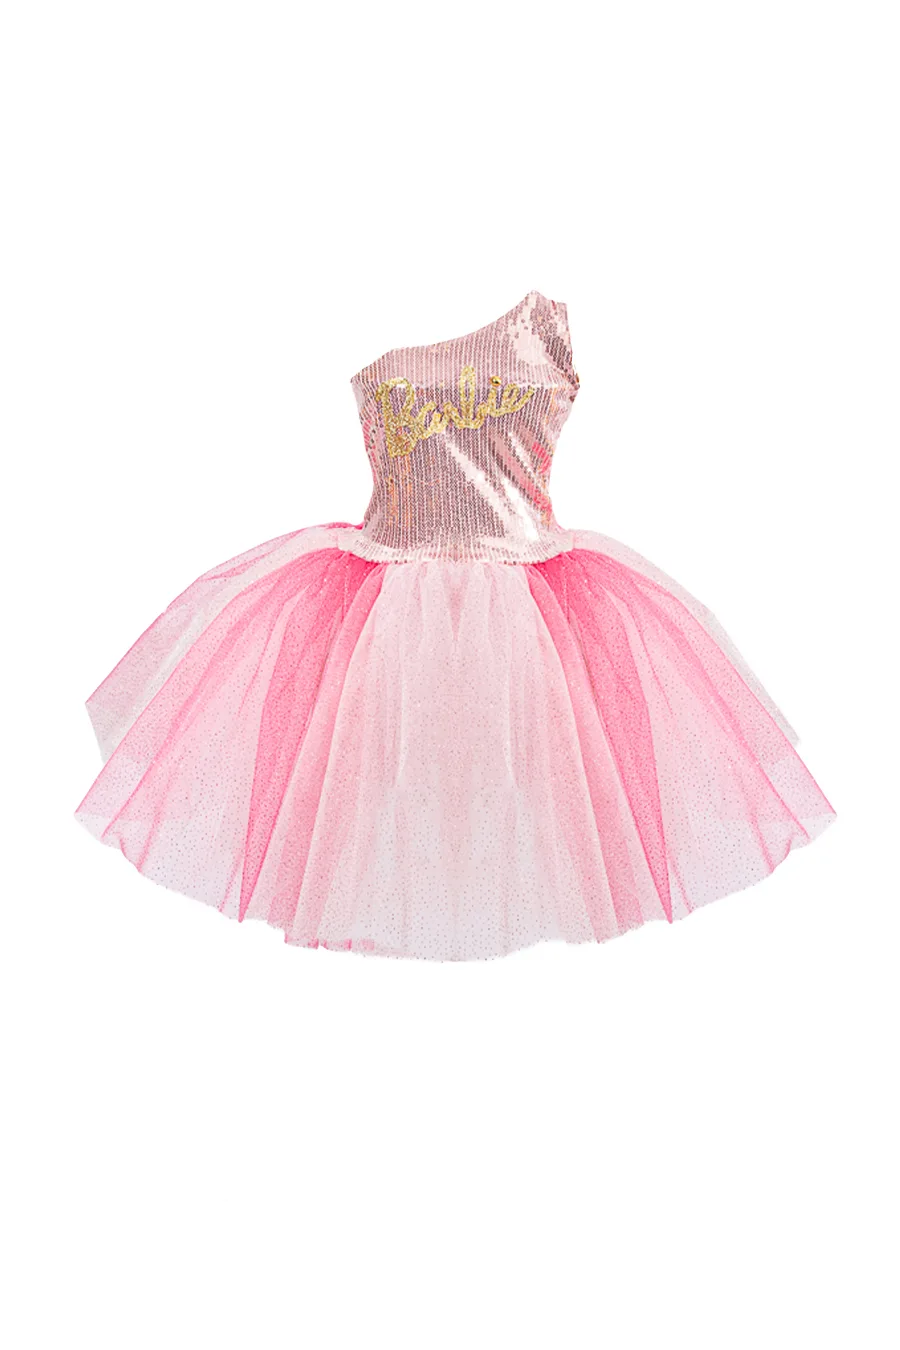 Fantasia Barbie Escola de Princesa Vestido Infantil